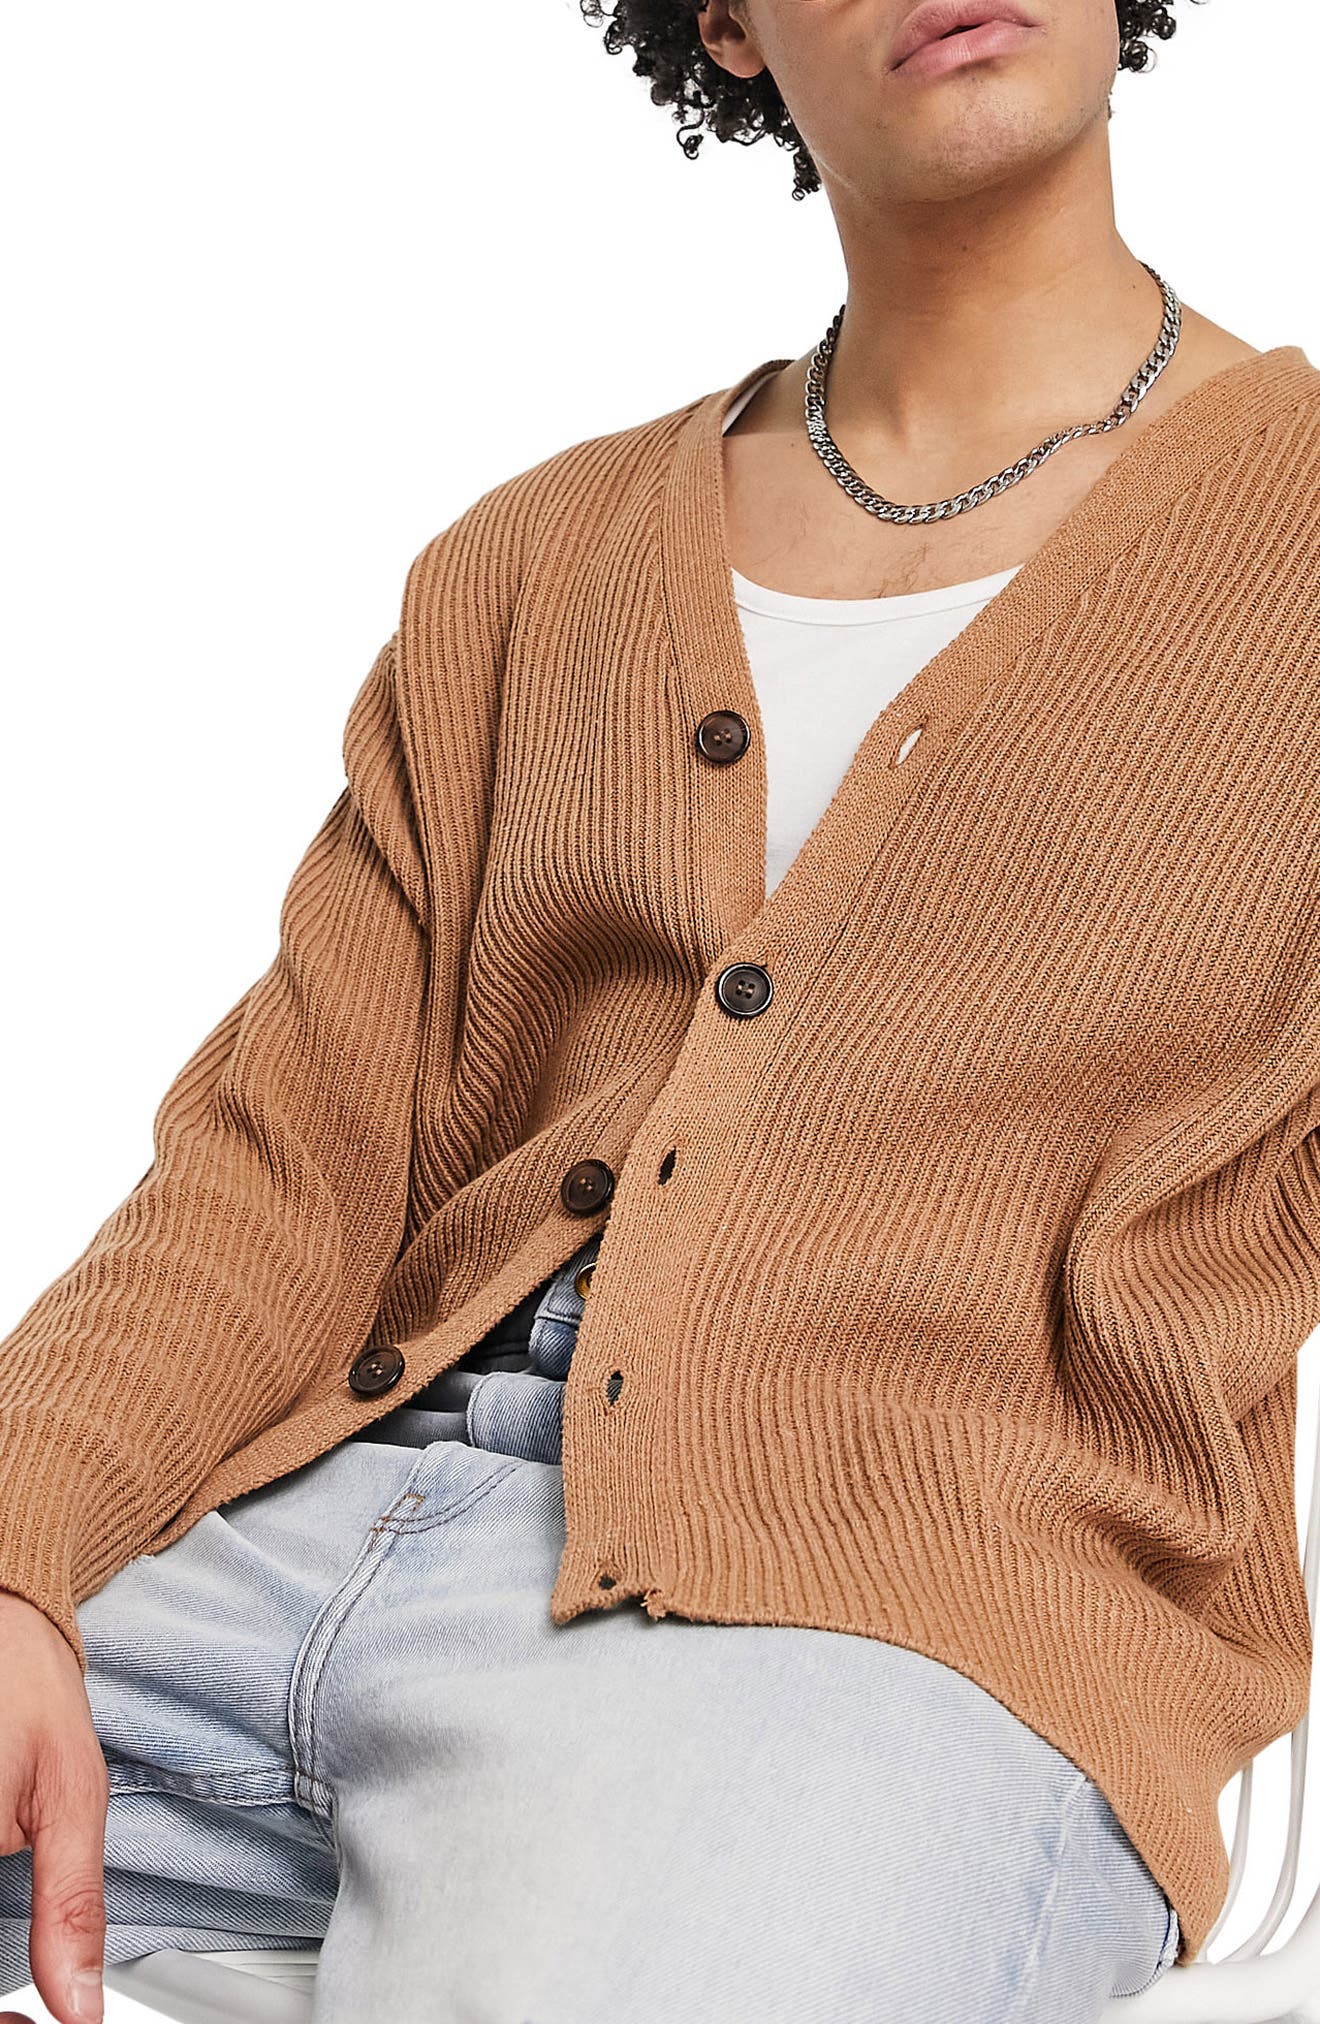 Men Hooded Baseball Varsity Slim Fit Jacket Button Cardigan Coat Sweater Outwear Sports Tops